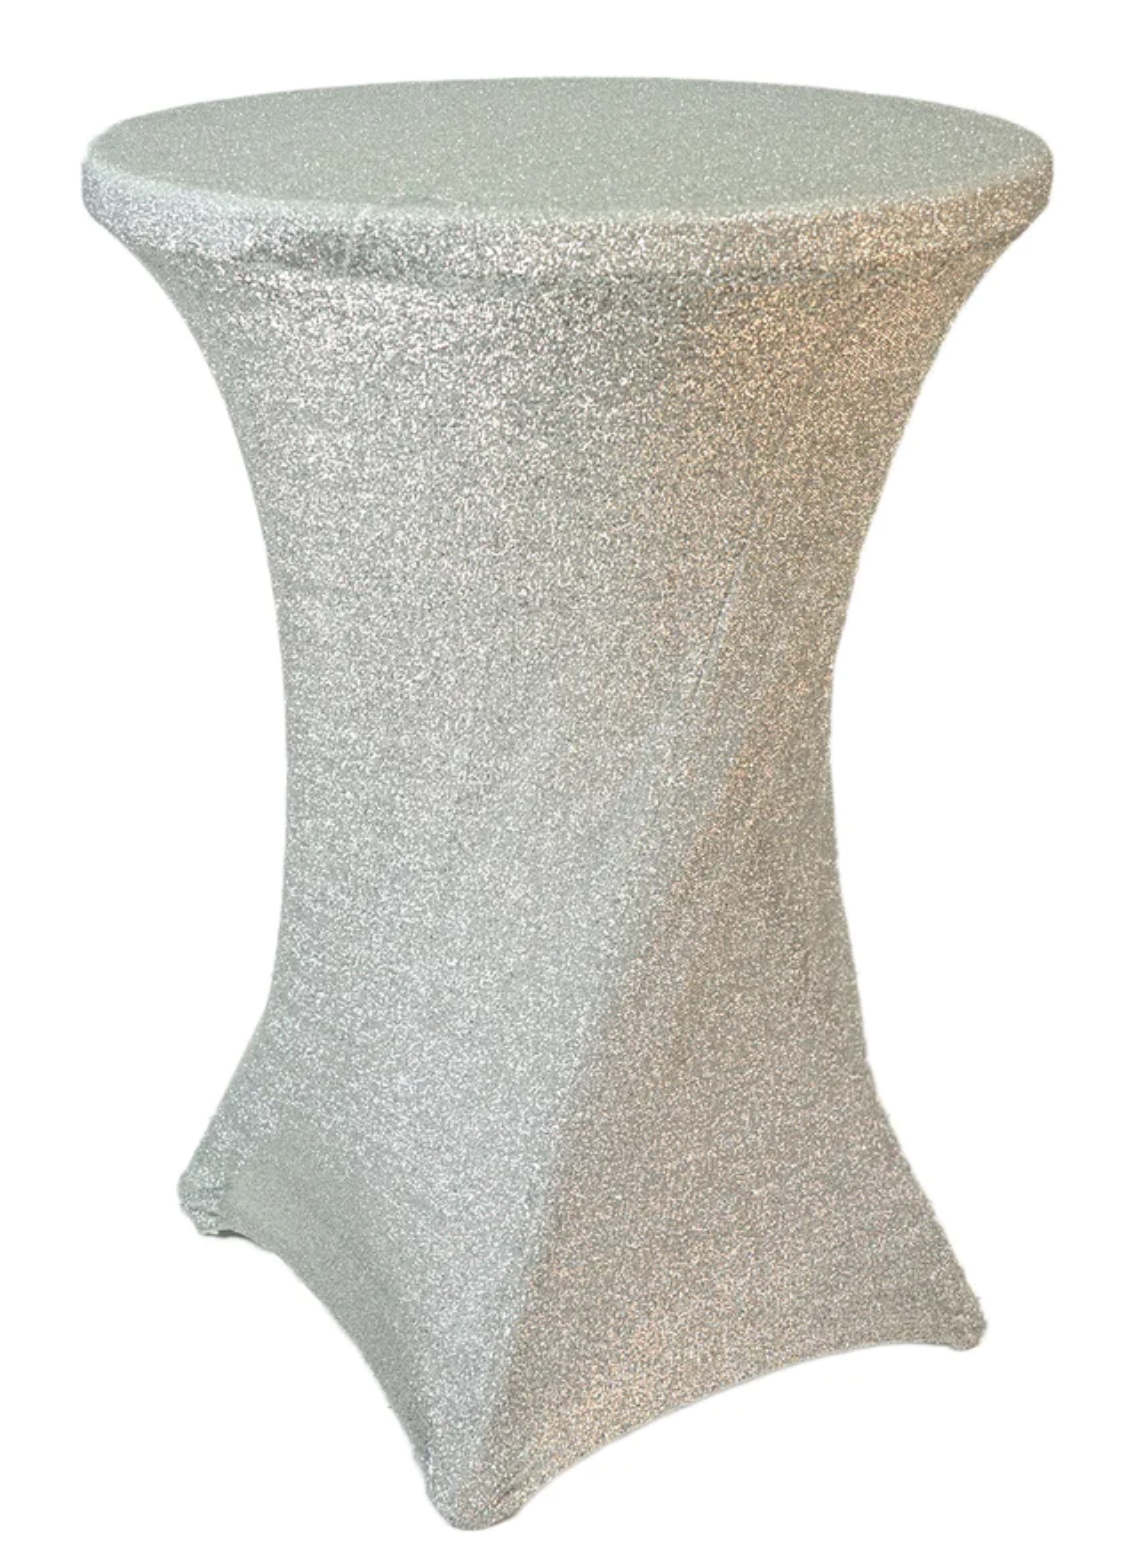 Cocktail Table Cloth - Silver Sparkle